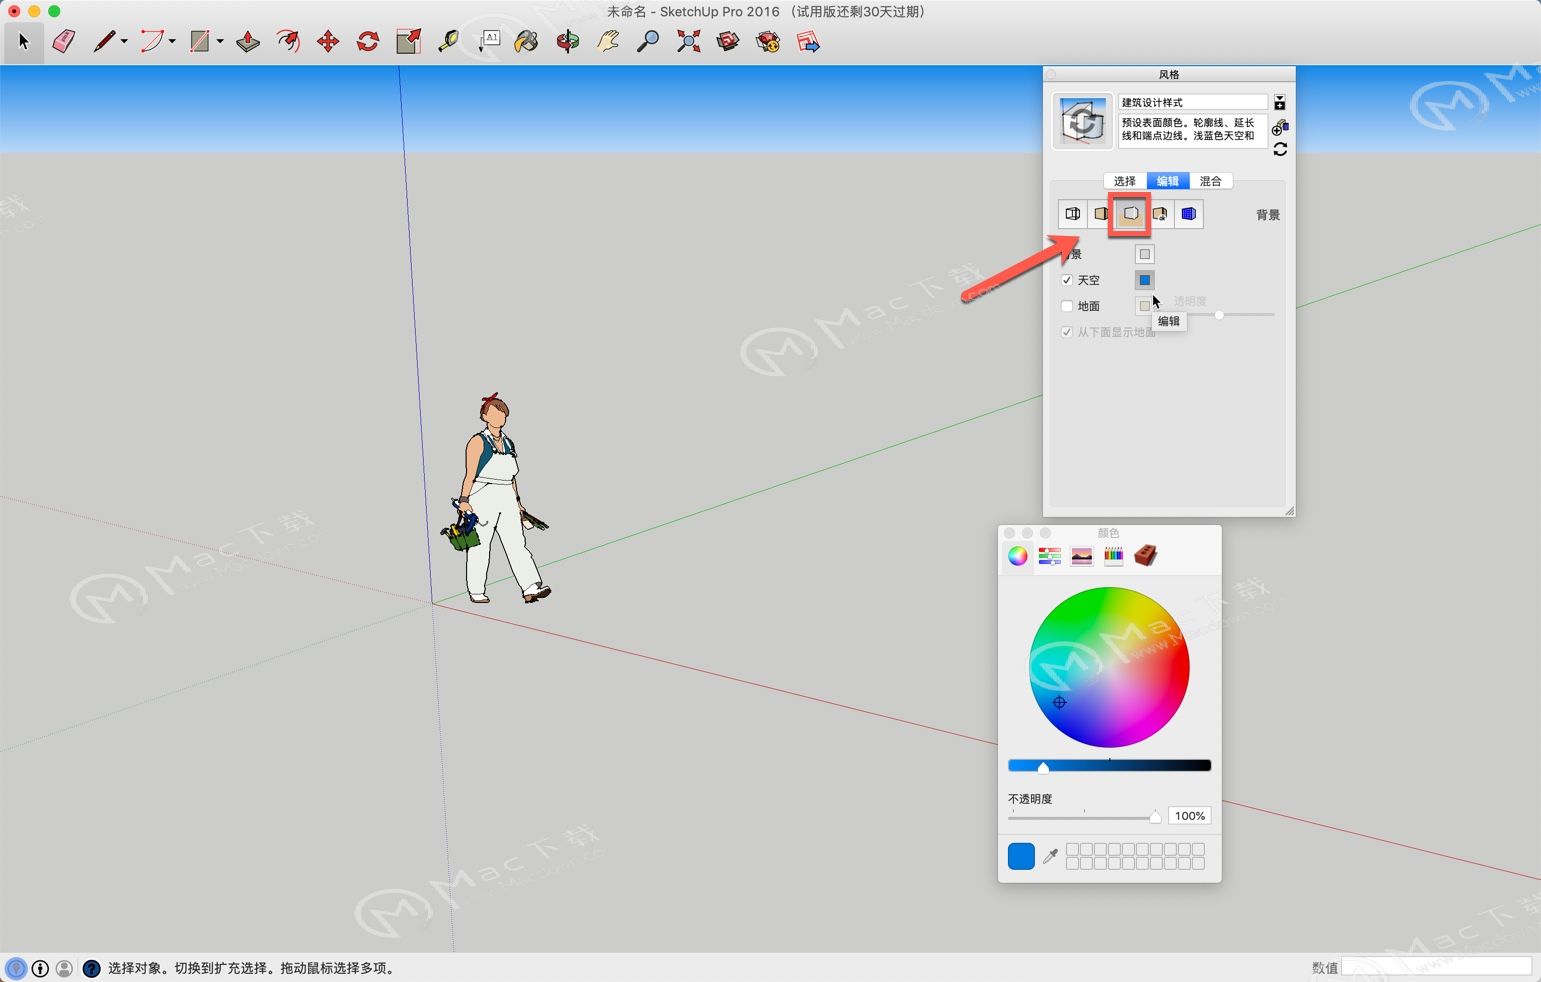 Sketchup边线设置 Sketchup Pro For Mac 背景天空边线样式的设置方法 苏文强的博客 程序员宅基地 程序员宅基地